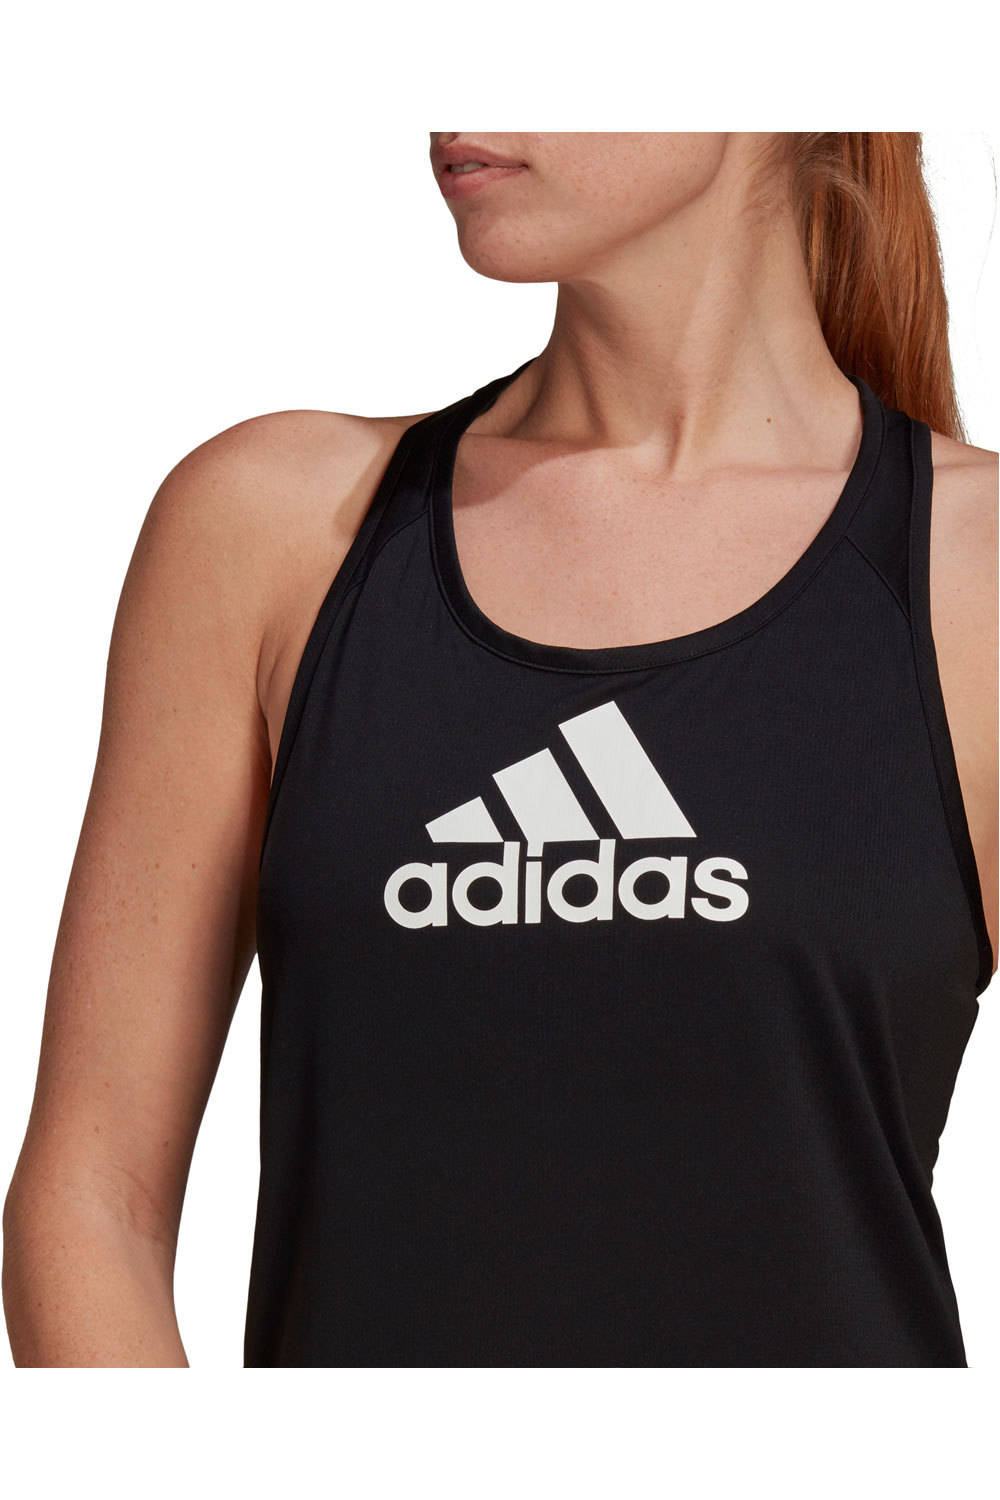 adidas camiseta tirantes fitness mujer AEROREADY Designed 2 Move Logo Sport (de tirantes) vista detalle